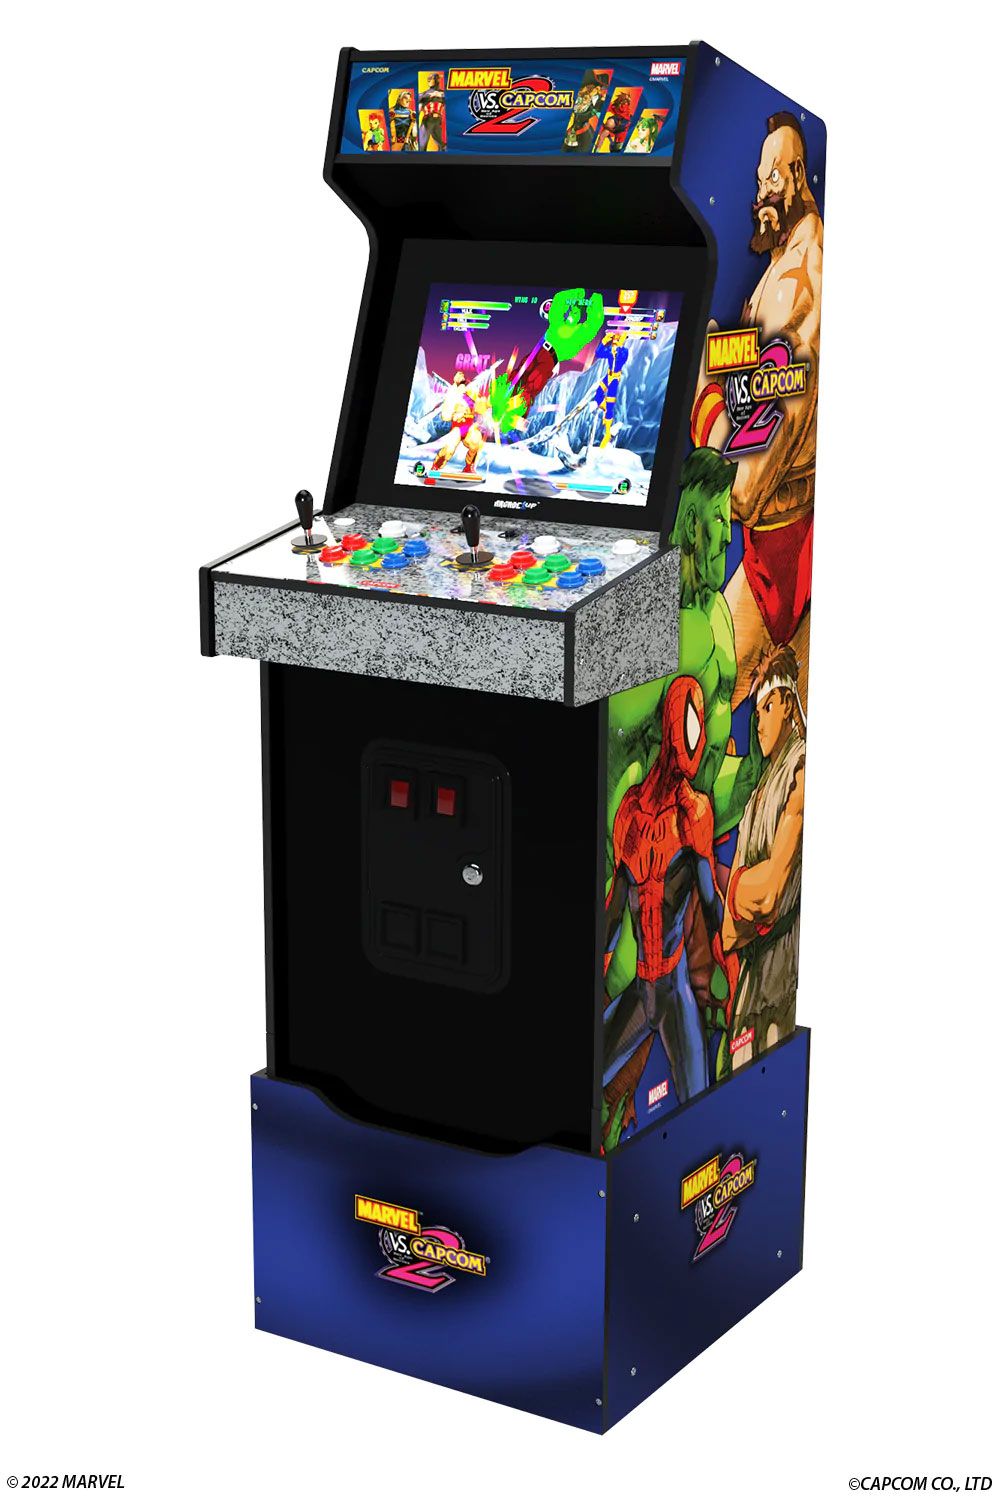 Aracde1Up's Marvel Vs. Capcom 2 Cabinet